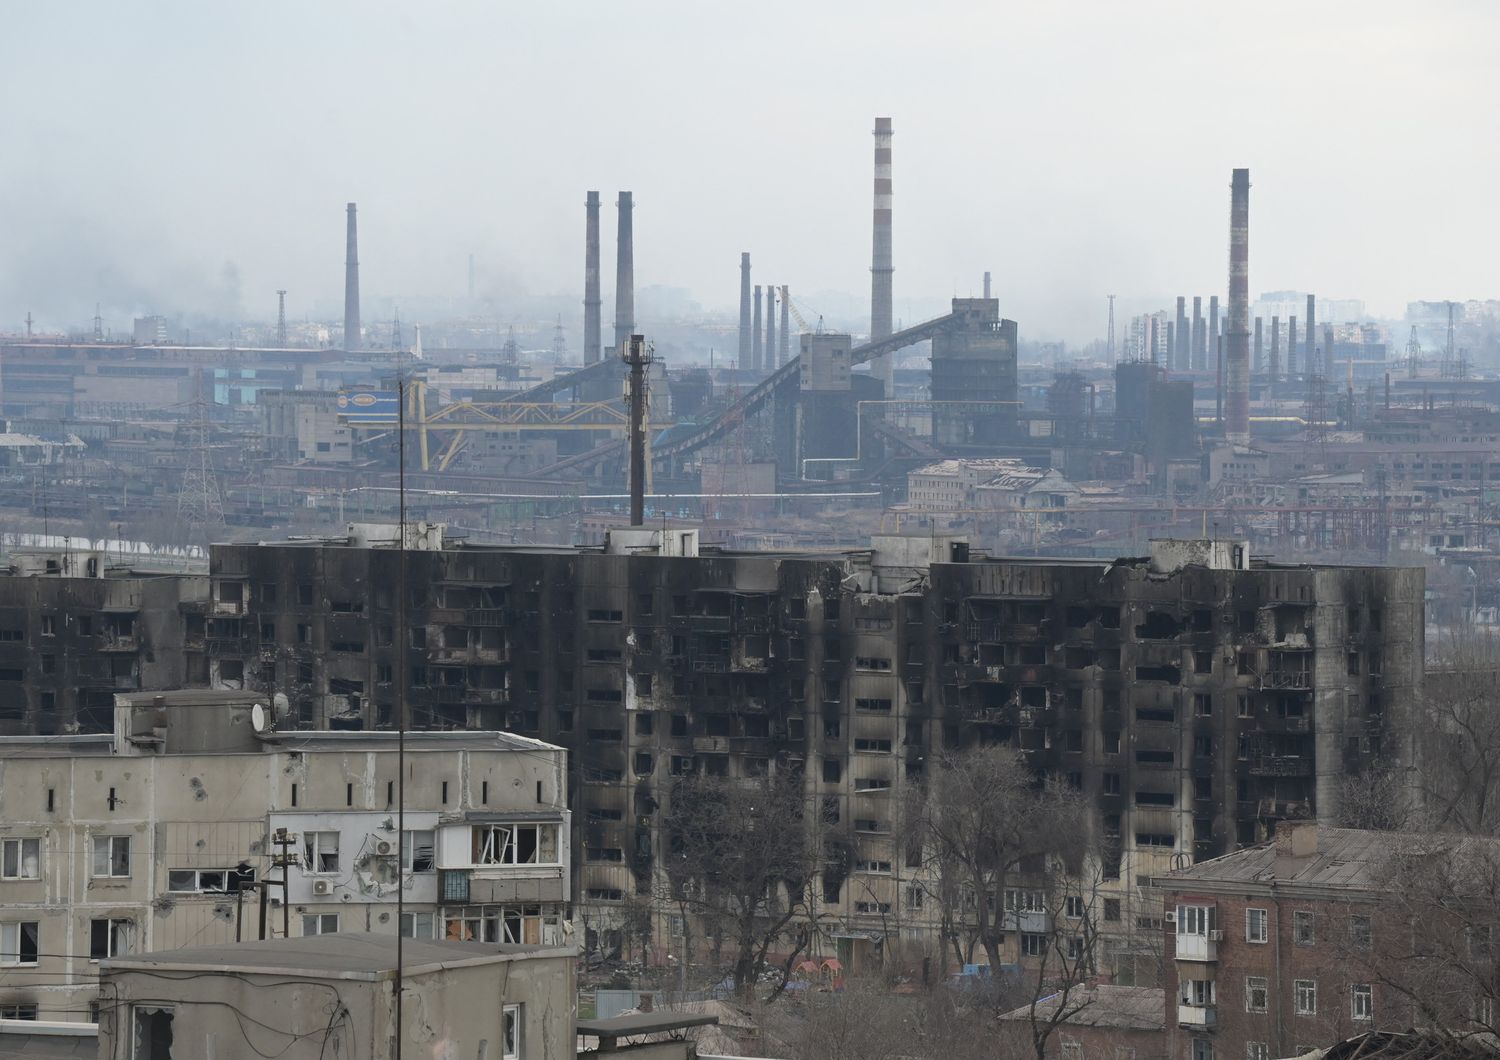 L'acciaieria Azovstal di Mariupol